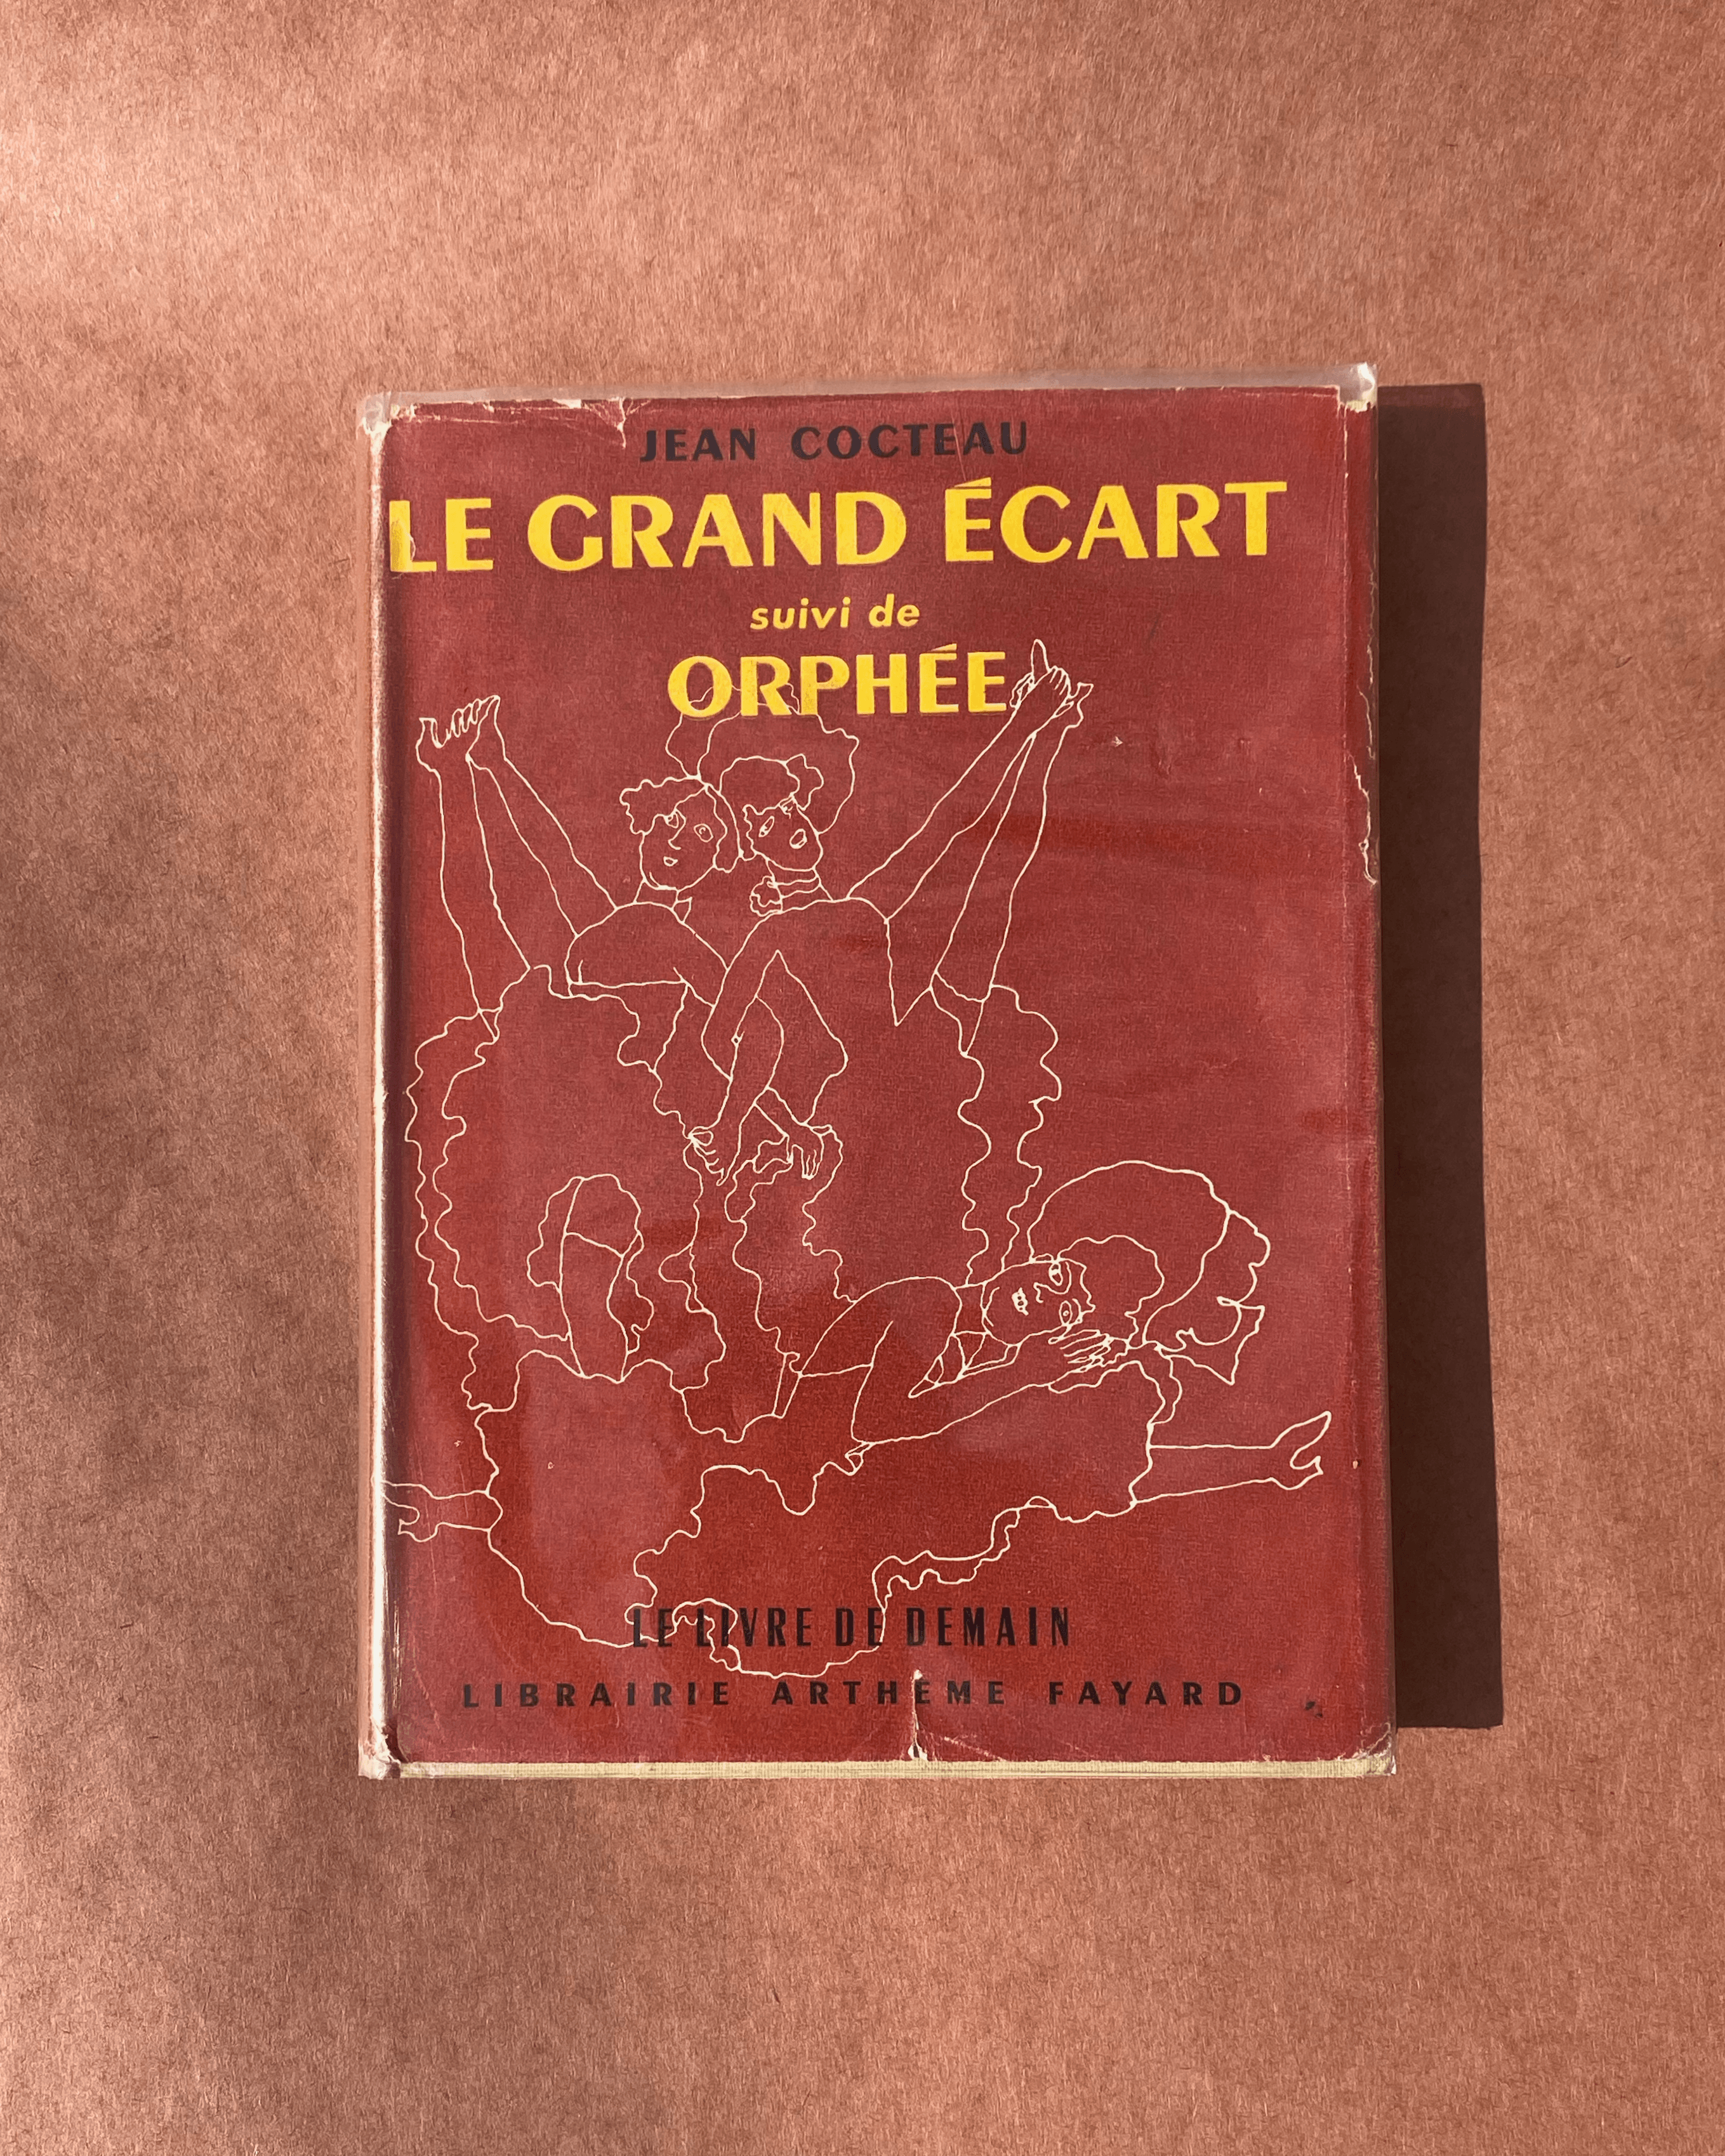 Le Grand Écart 1954 1st Edition with pen and ink drawing by Jean Cocteau - Tuxedo Park Junk Shop